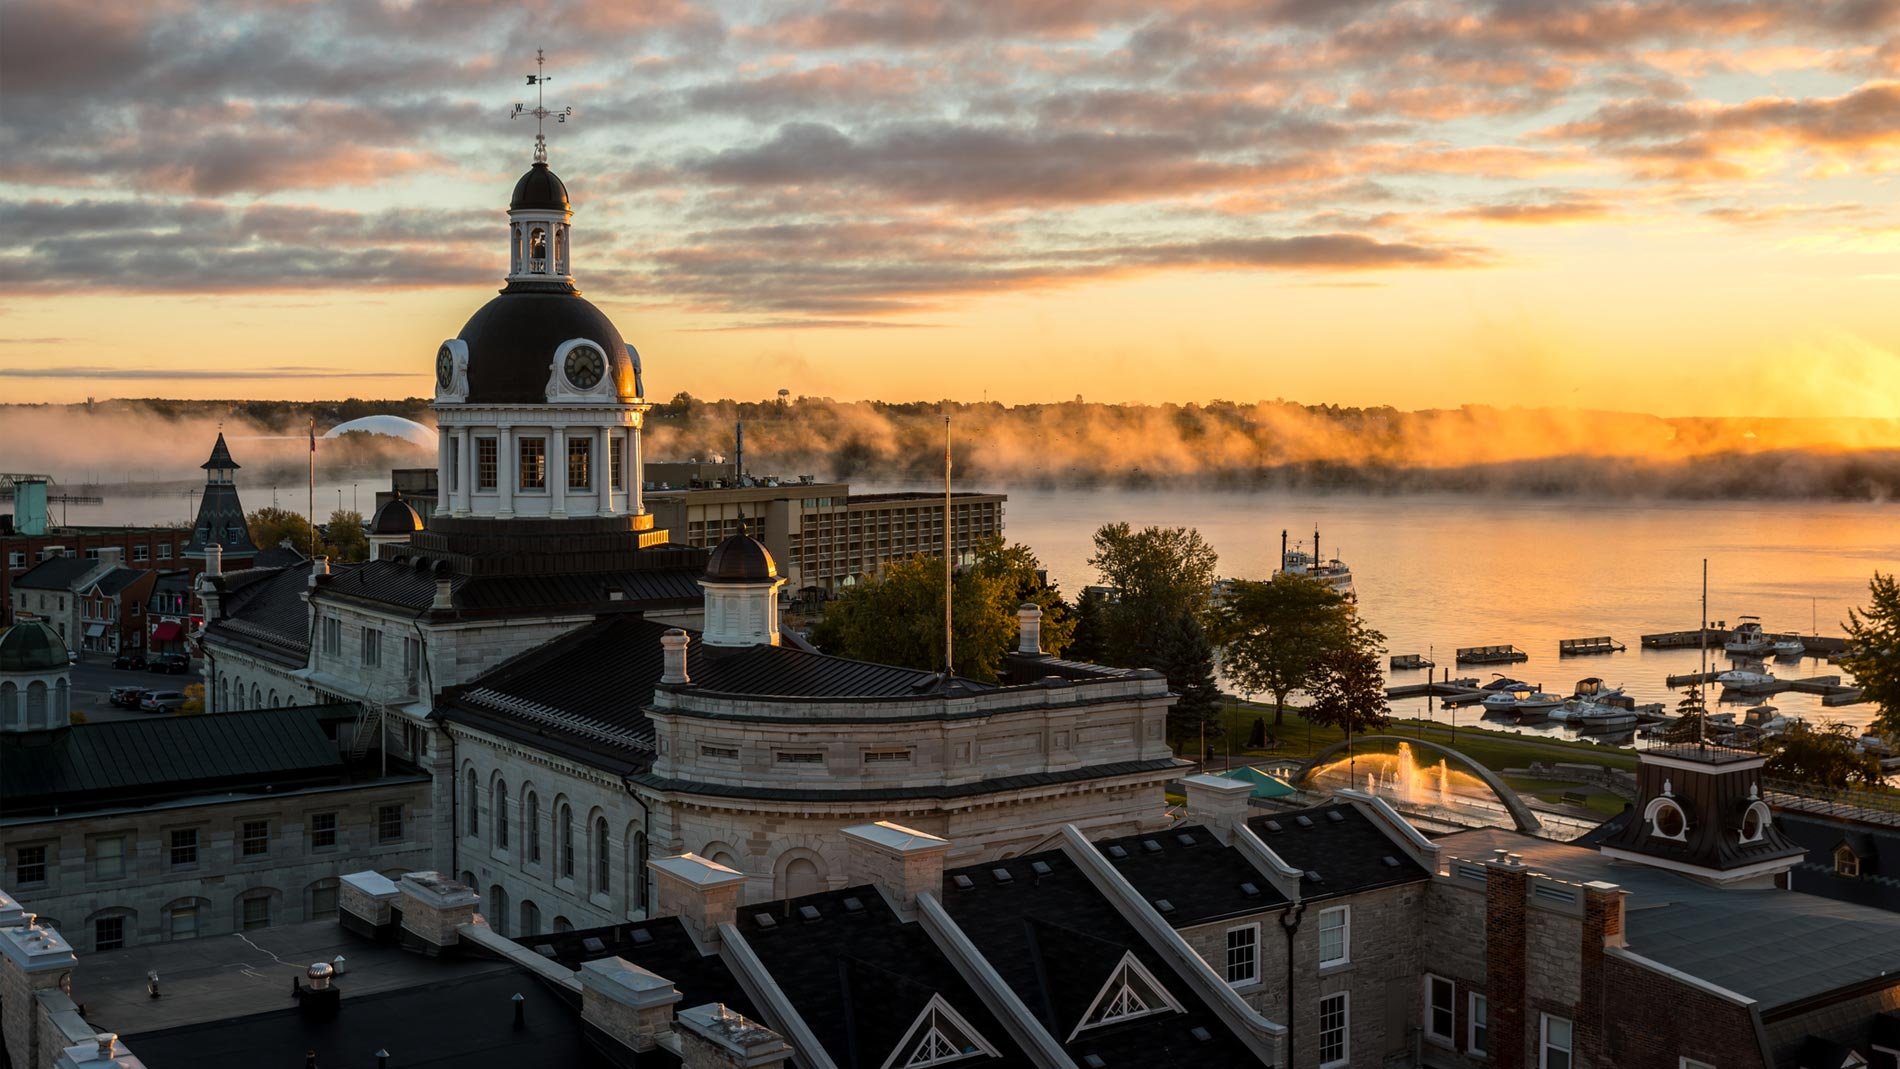 City of Kingston, Ontario at sunrise.